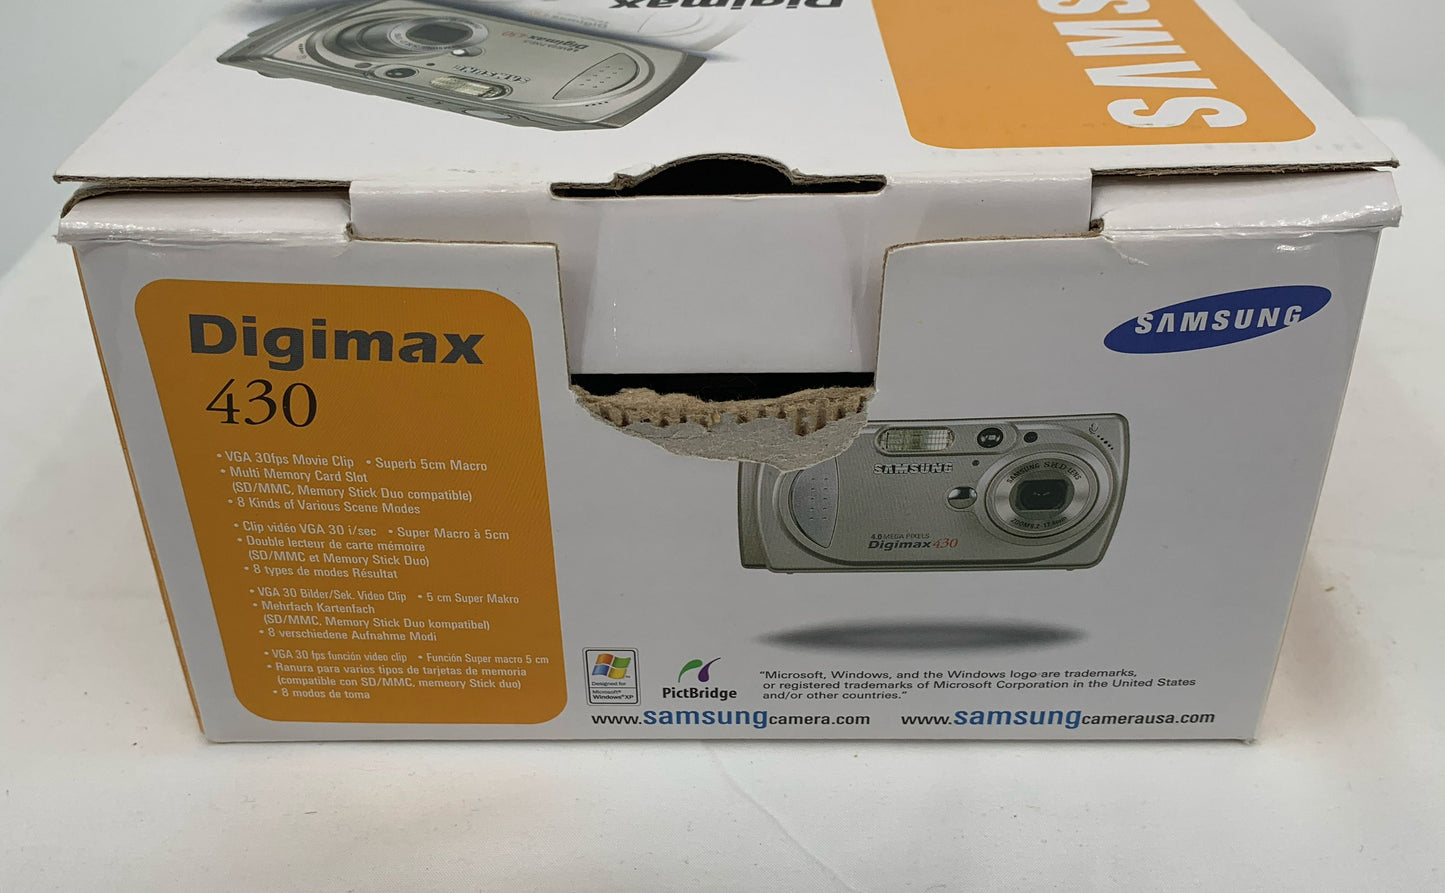 Samsung Digimax 430 Digital Camera 4.0 Mega Pixel Resolution